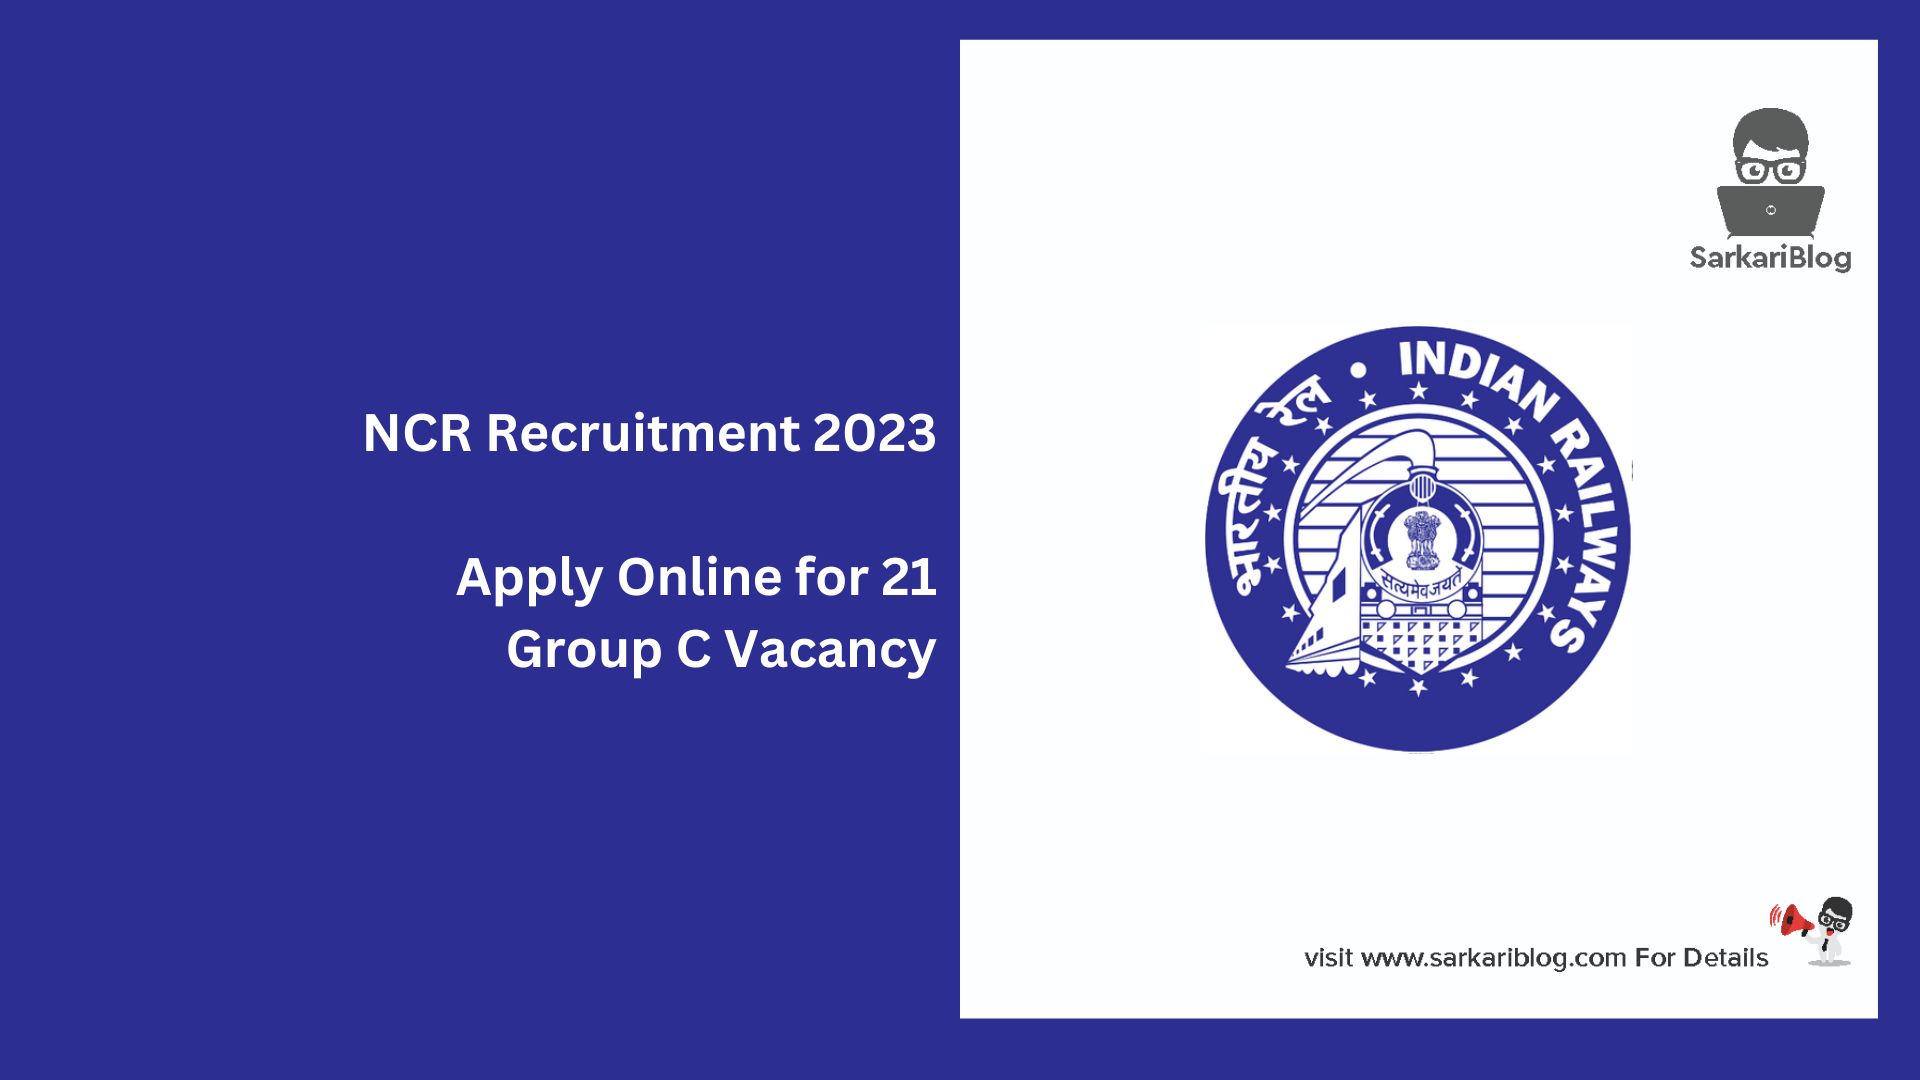 NCR Recruitment 2023